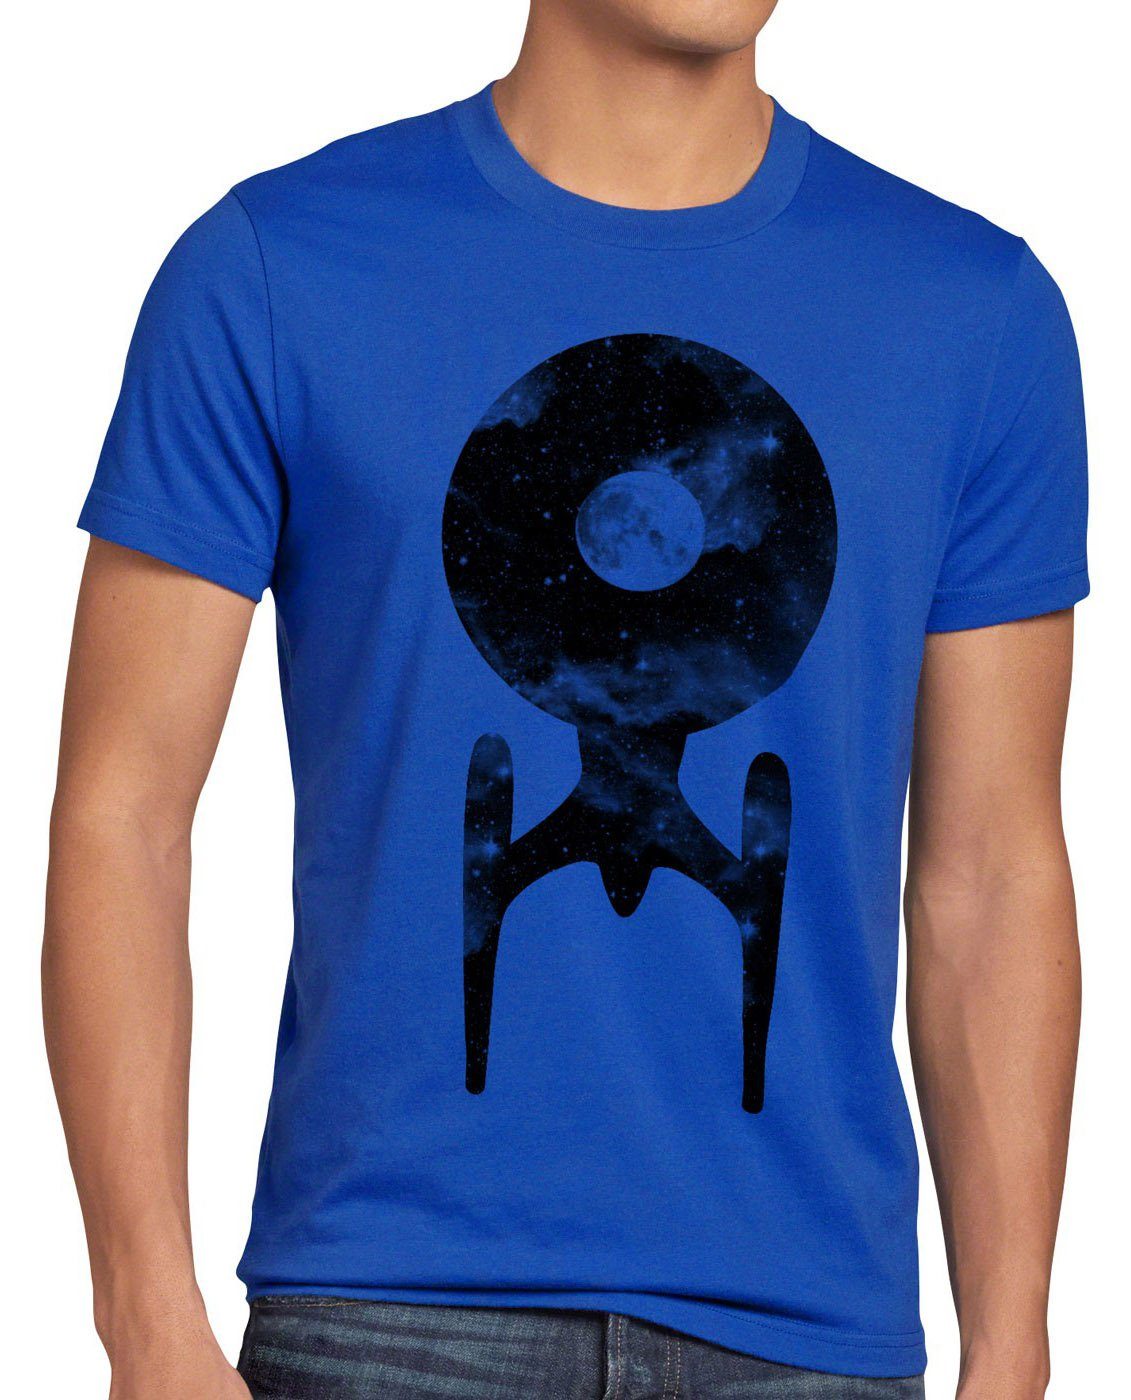 trekkie uss T-Shirt Print-Shirt style3 Trek blau trekkie ncc-1701-d star Raumschiff enterprise Herren